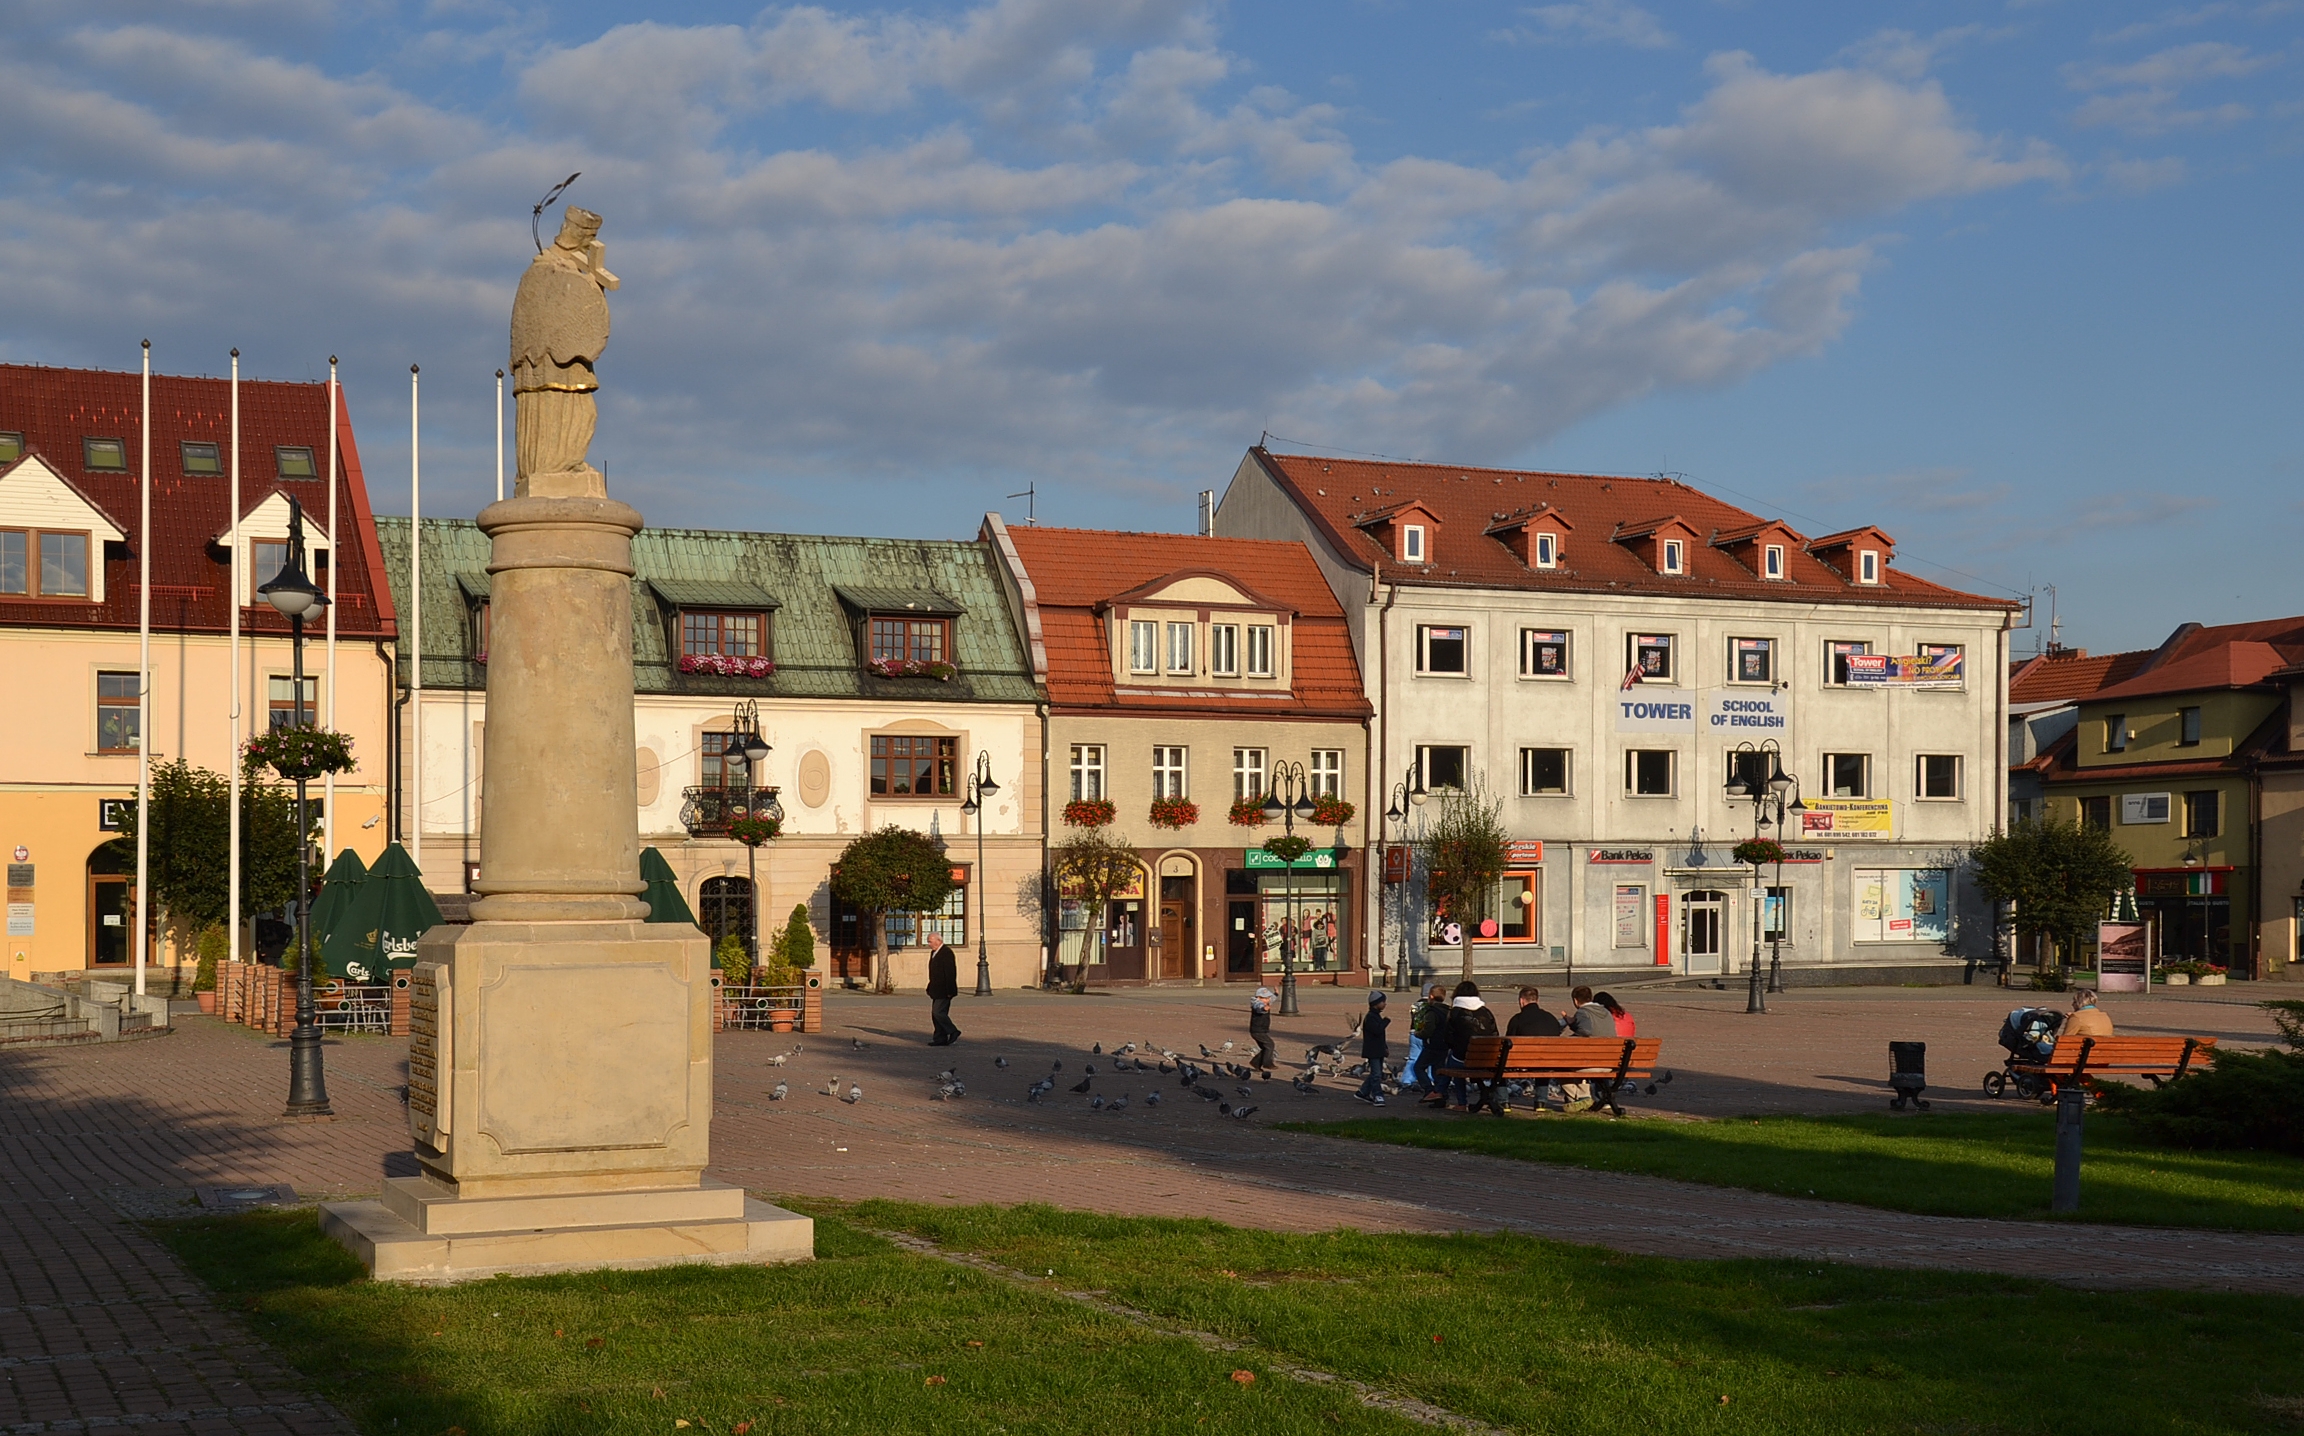 Żory (Sohrau) - market place